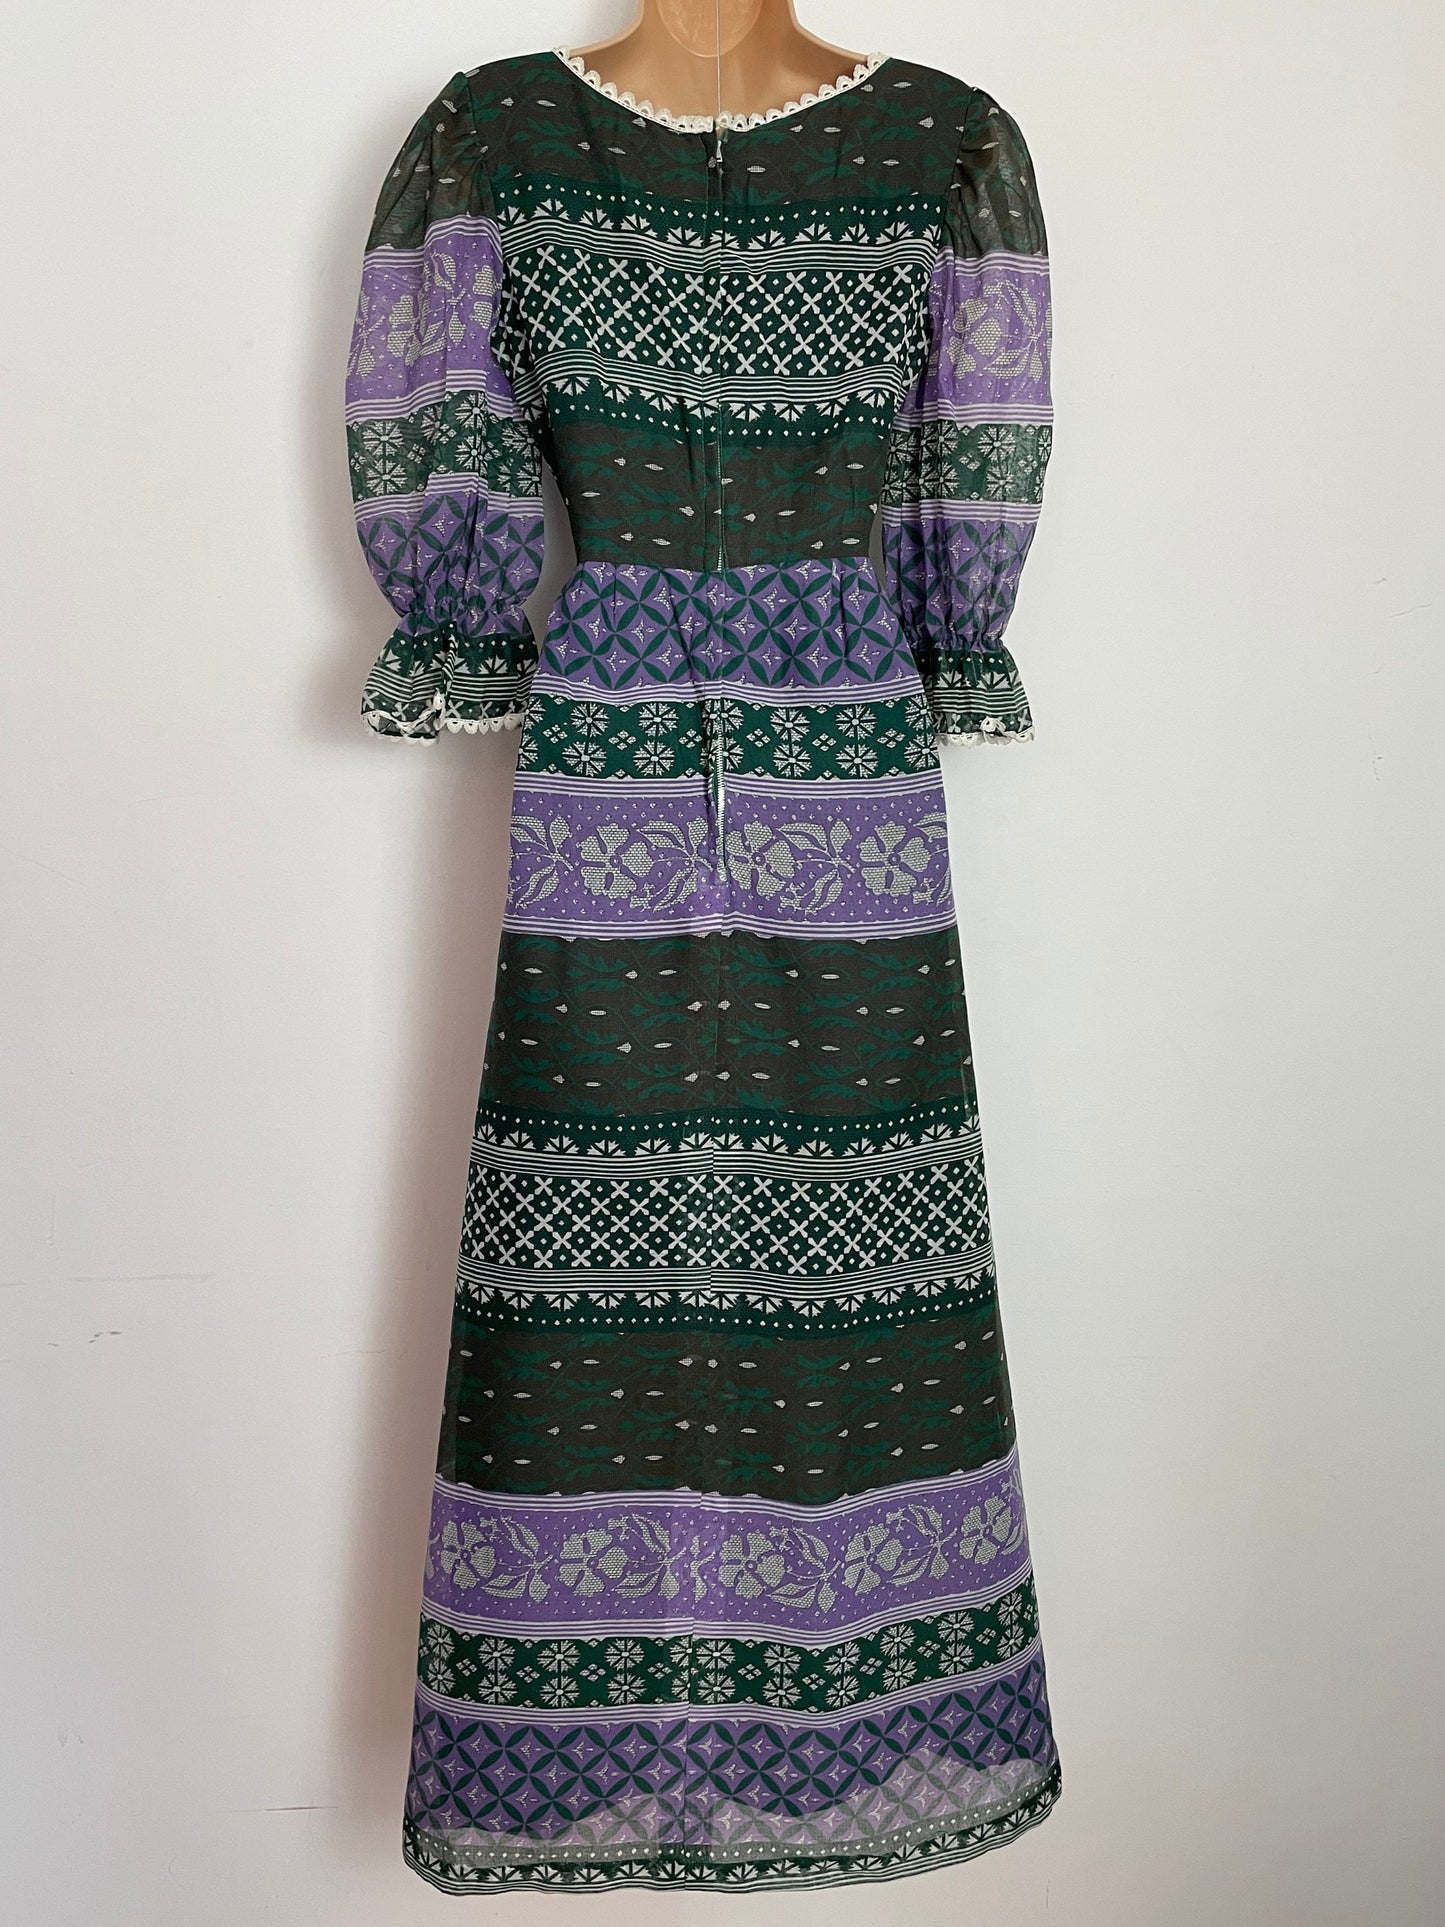 Vintage 1970s UK Size 6 Dark Green & Purple Abstract Print 3/4 Sleeve Cotton Mix Prairie Boho Maxi Dress